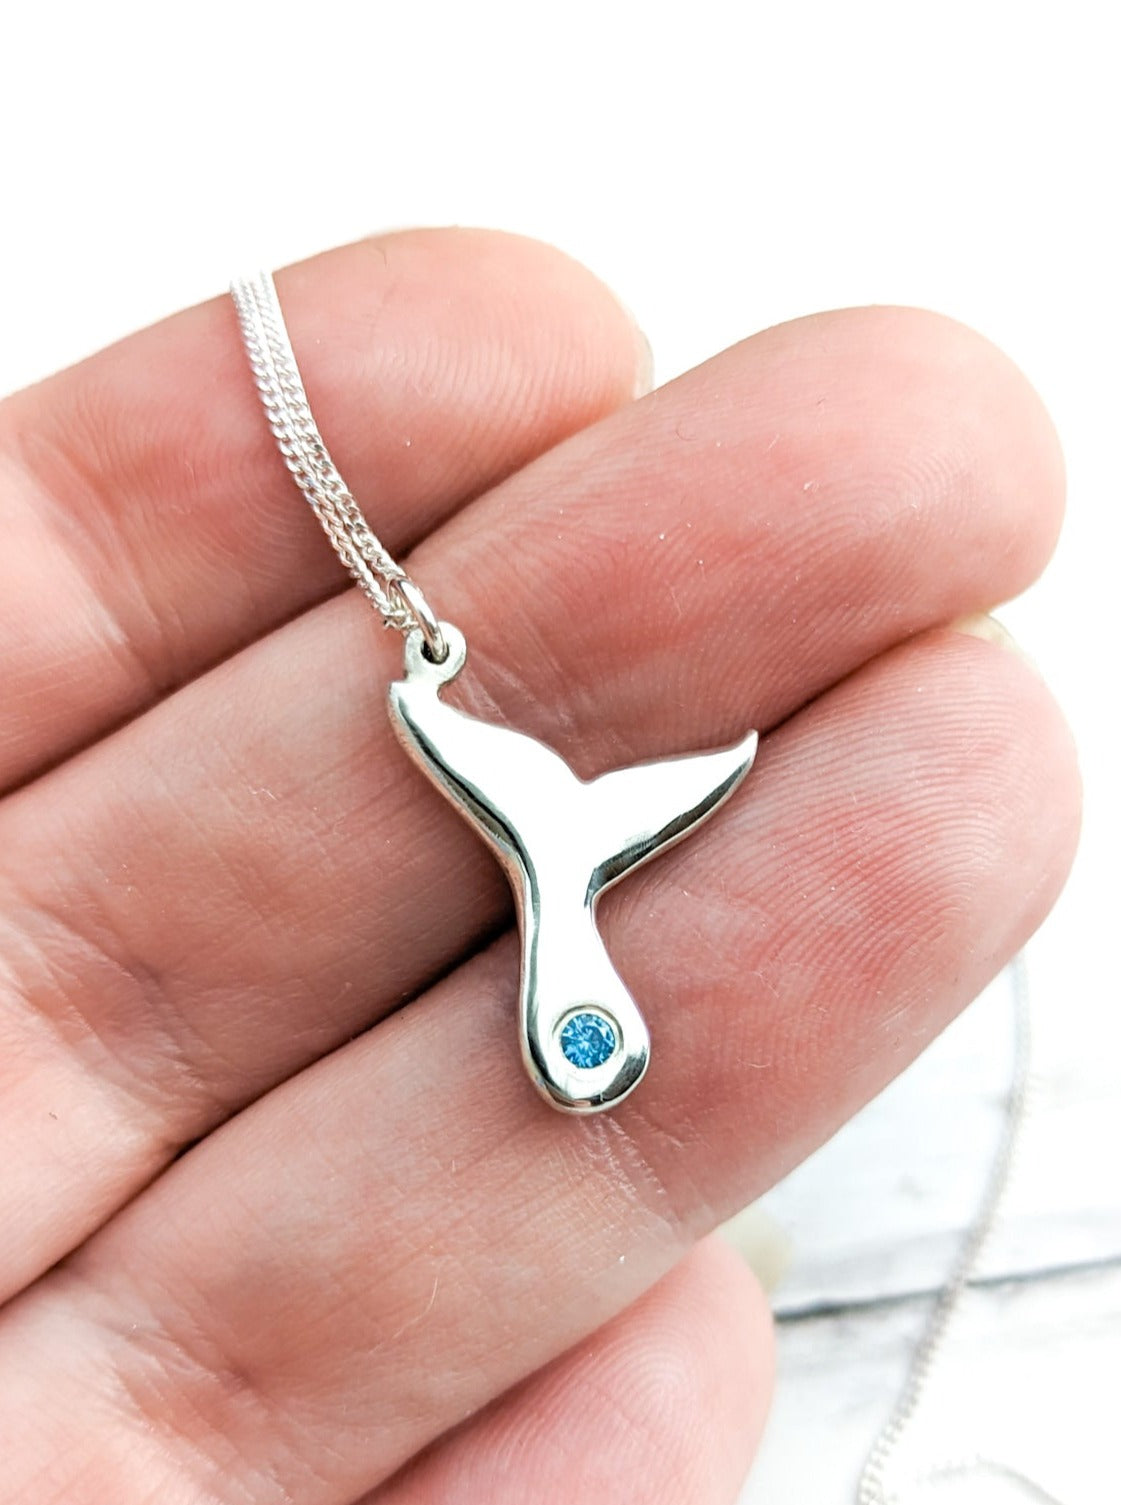 Silver whale fluke pendant with ocean blue stone